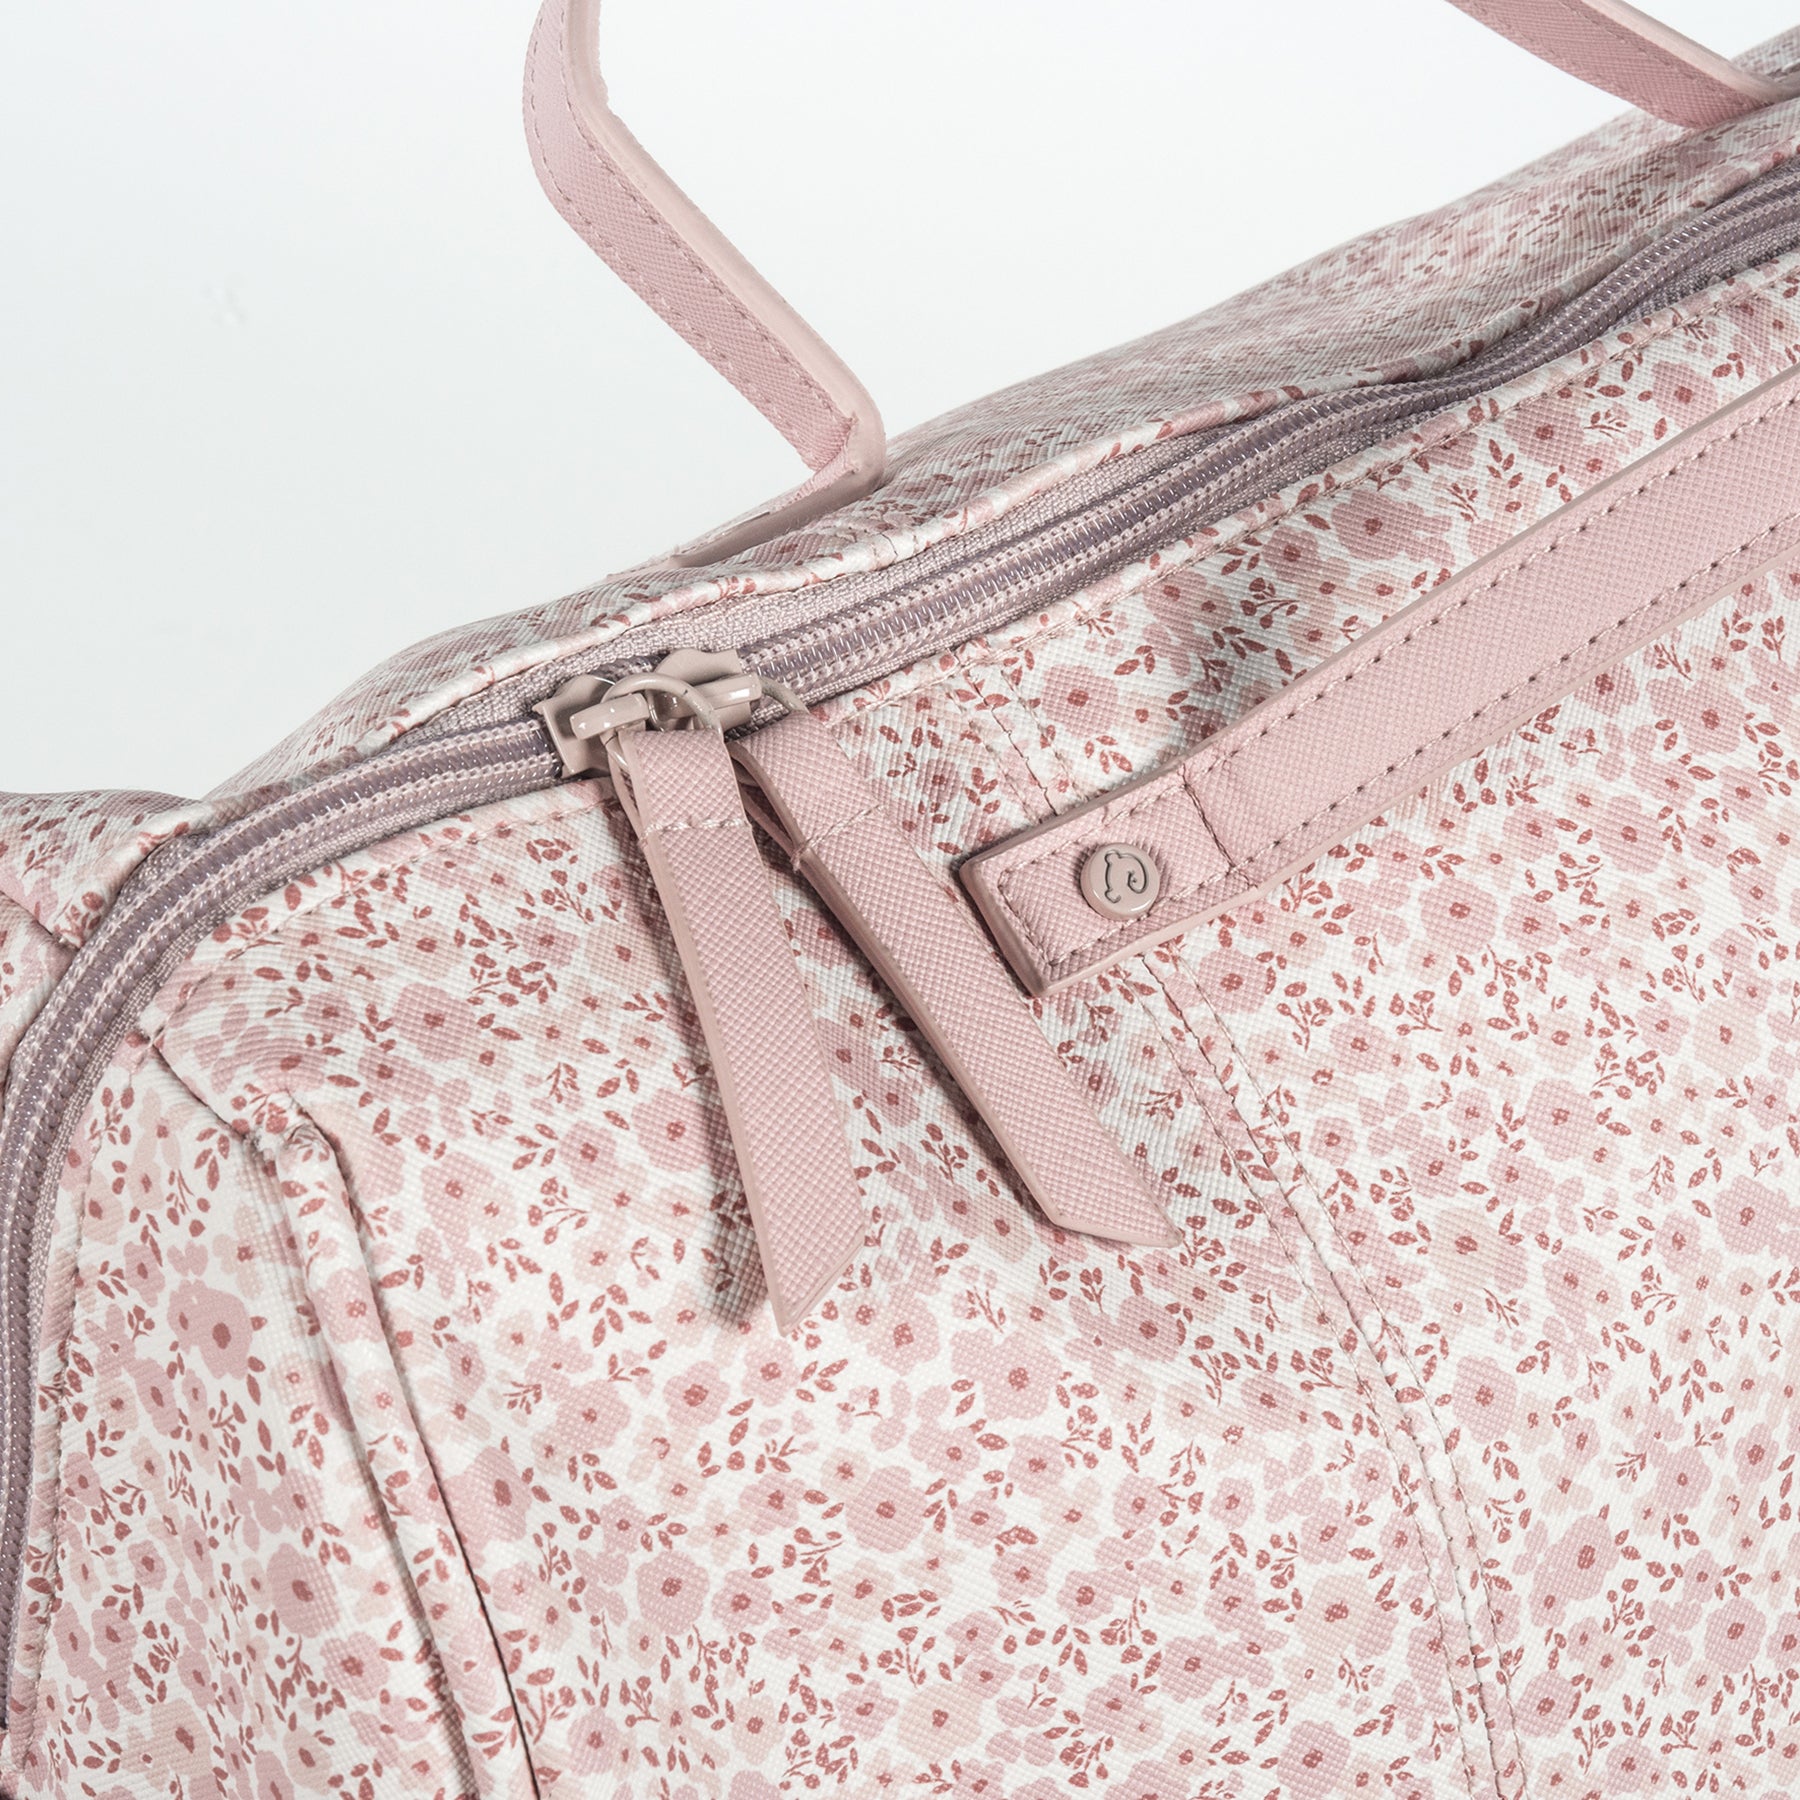 Changing Bag Flower Mellow Pink - 74937